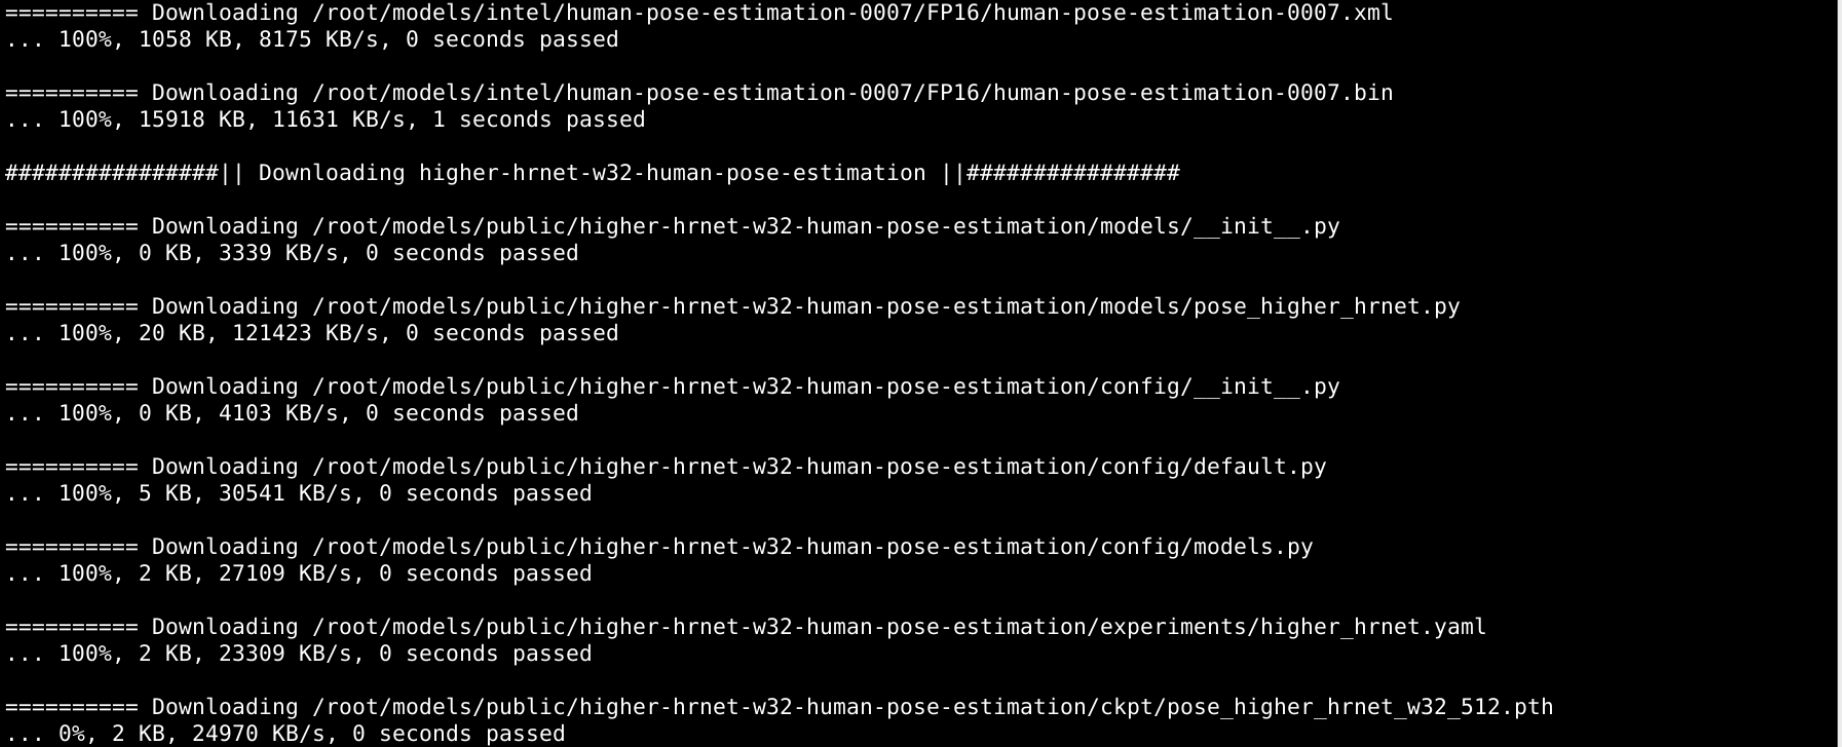 Screenshot of human-pose-estimation models downloading